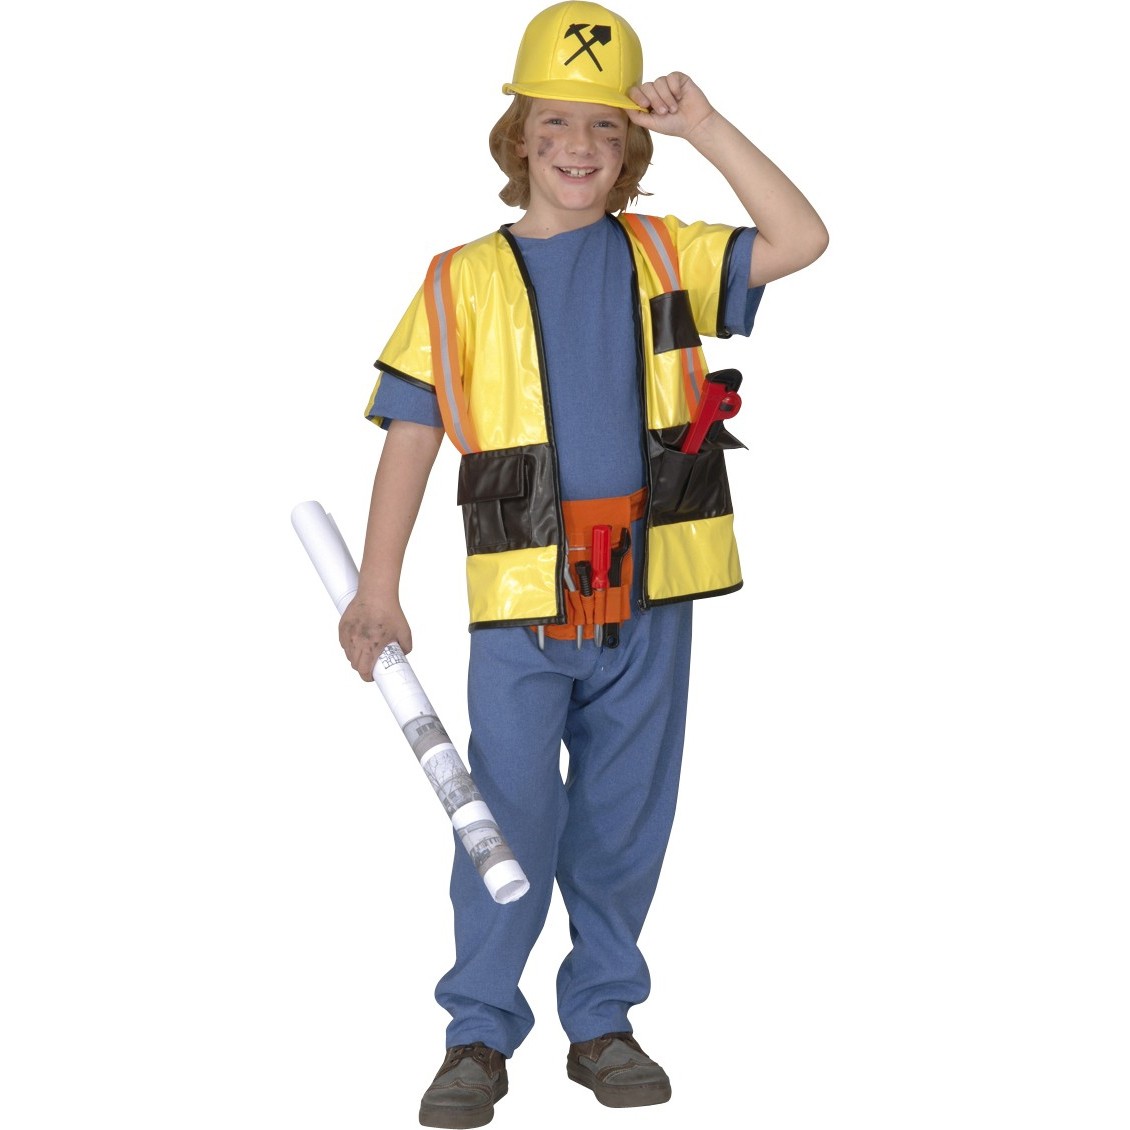 Kaufe Junge Kind Halloween Karneval Party Kostüme Bauarbeiter Karriere  Kostüme für Kinder